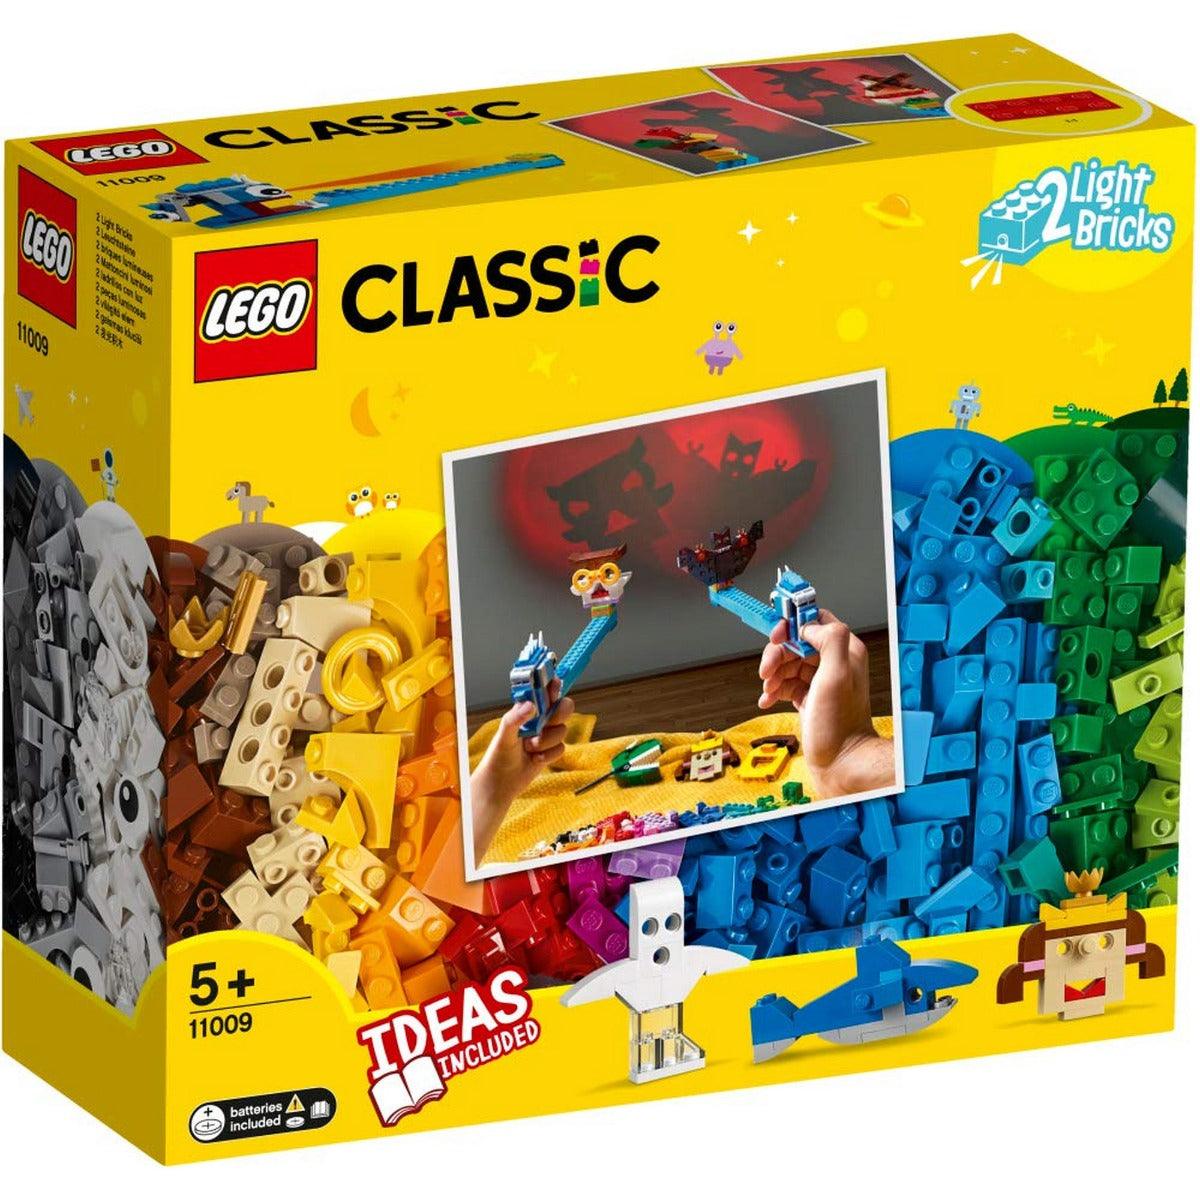 LEGO Classic Bricks and Lights